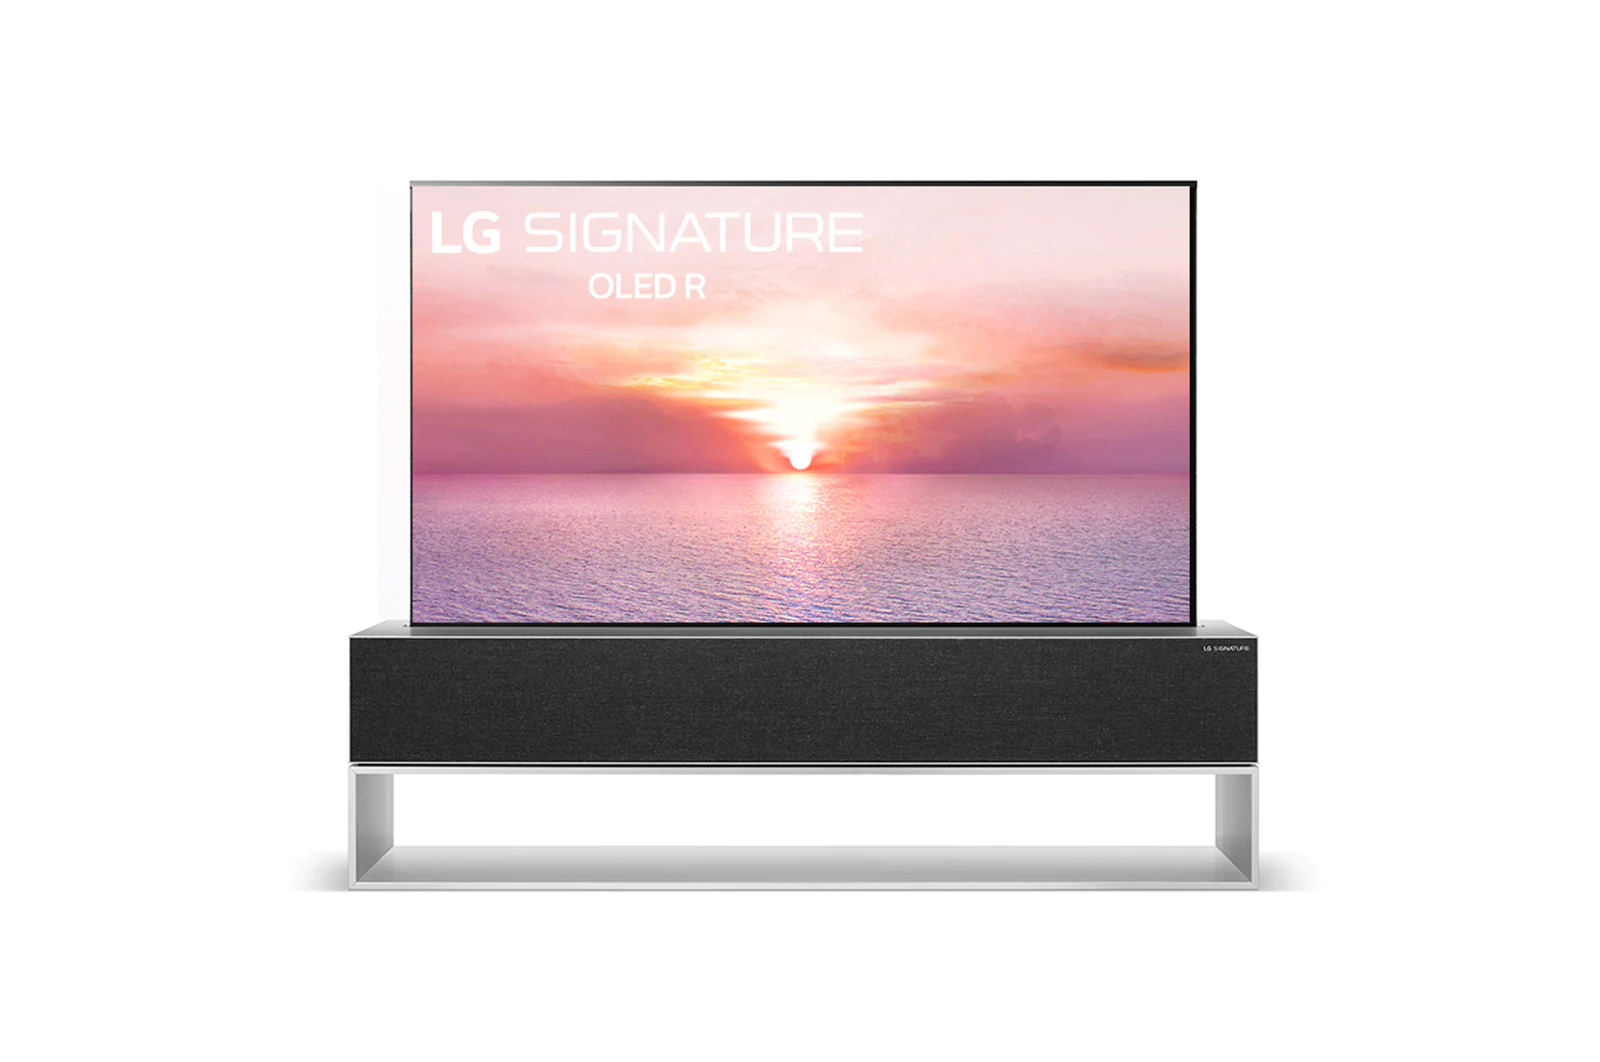 LG SIGNATURE OLED TV RX – 4K HDR Smart TV – 65” Class (64.5” Diag)